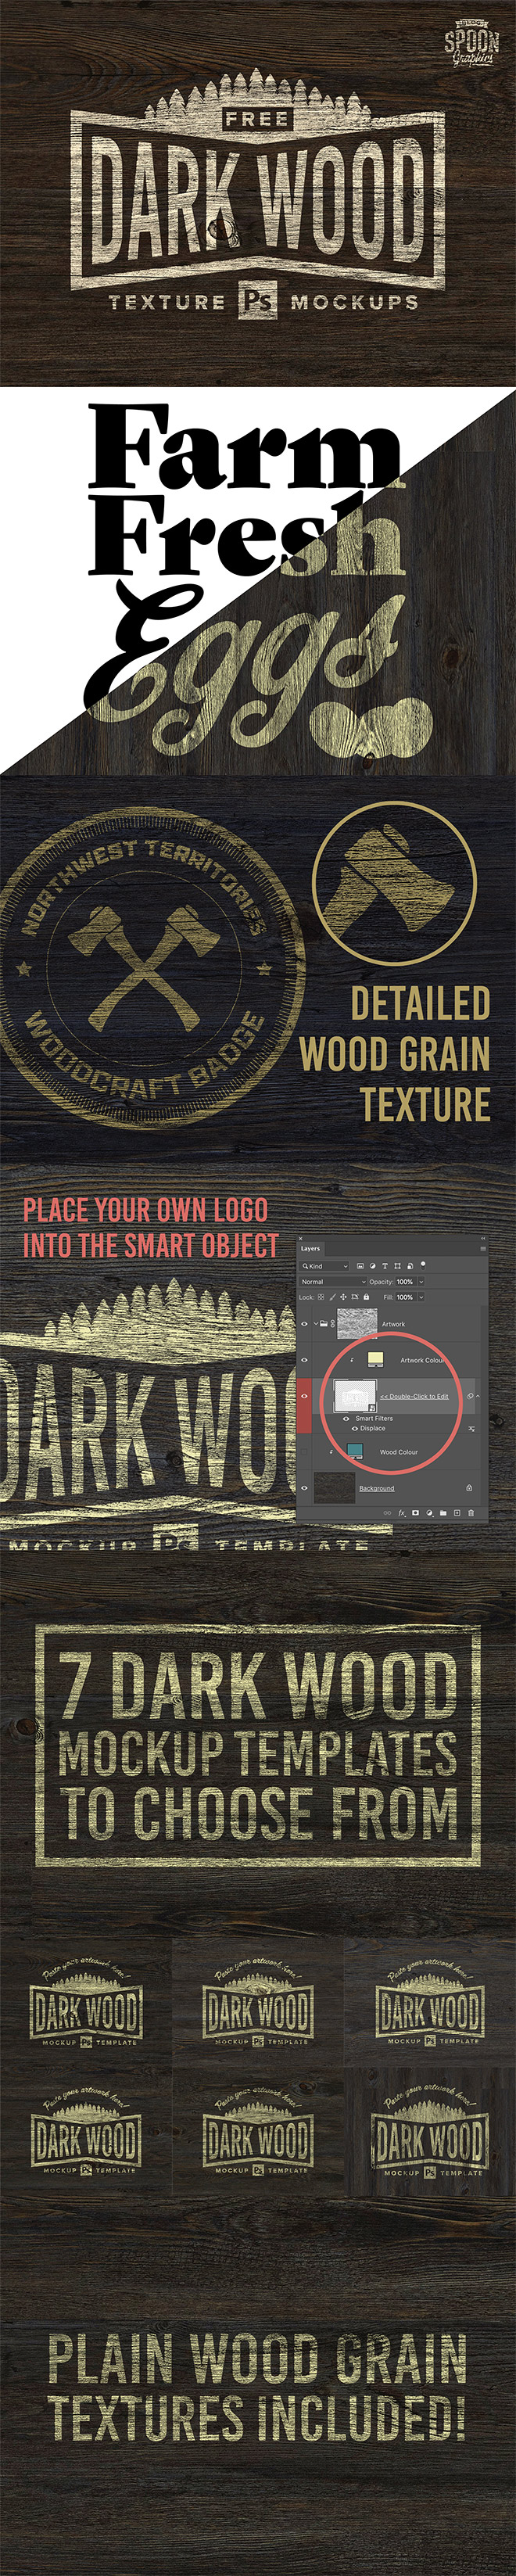 7 Free Dark Wood Texture Photoshop Mockup Templates